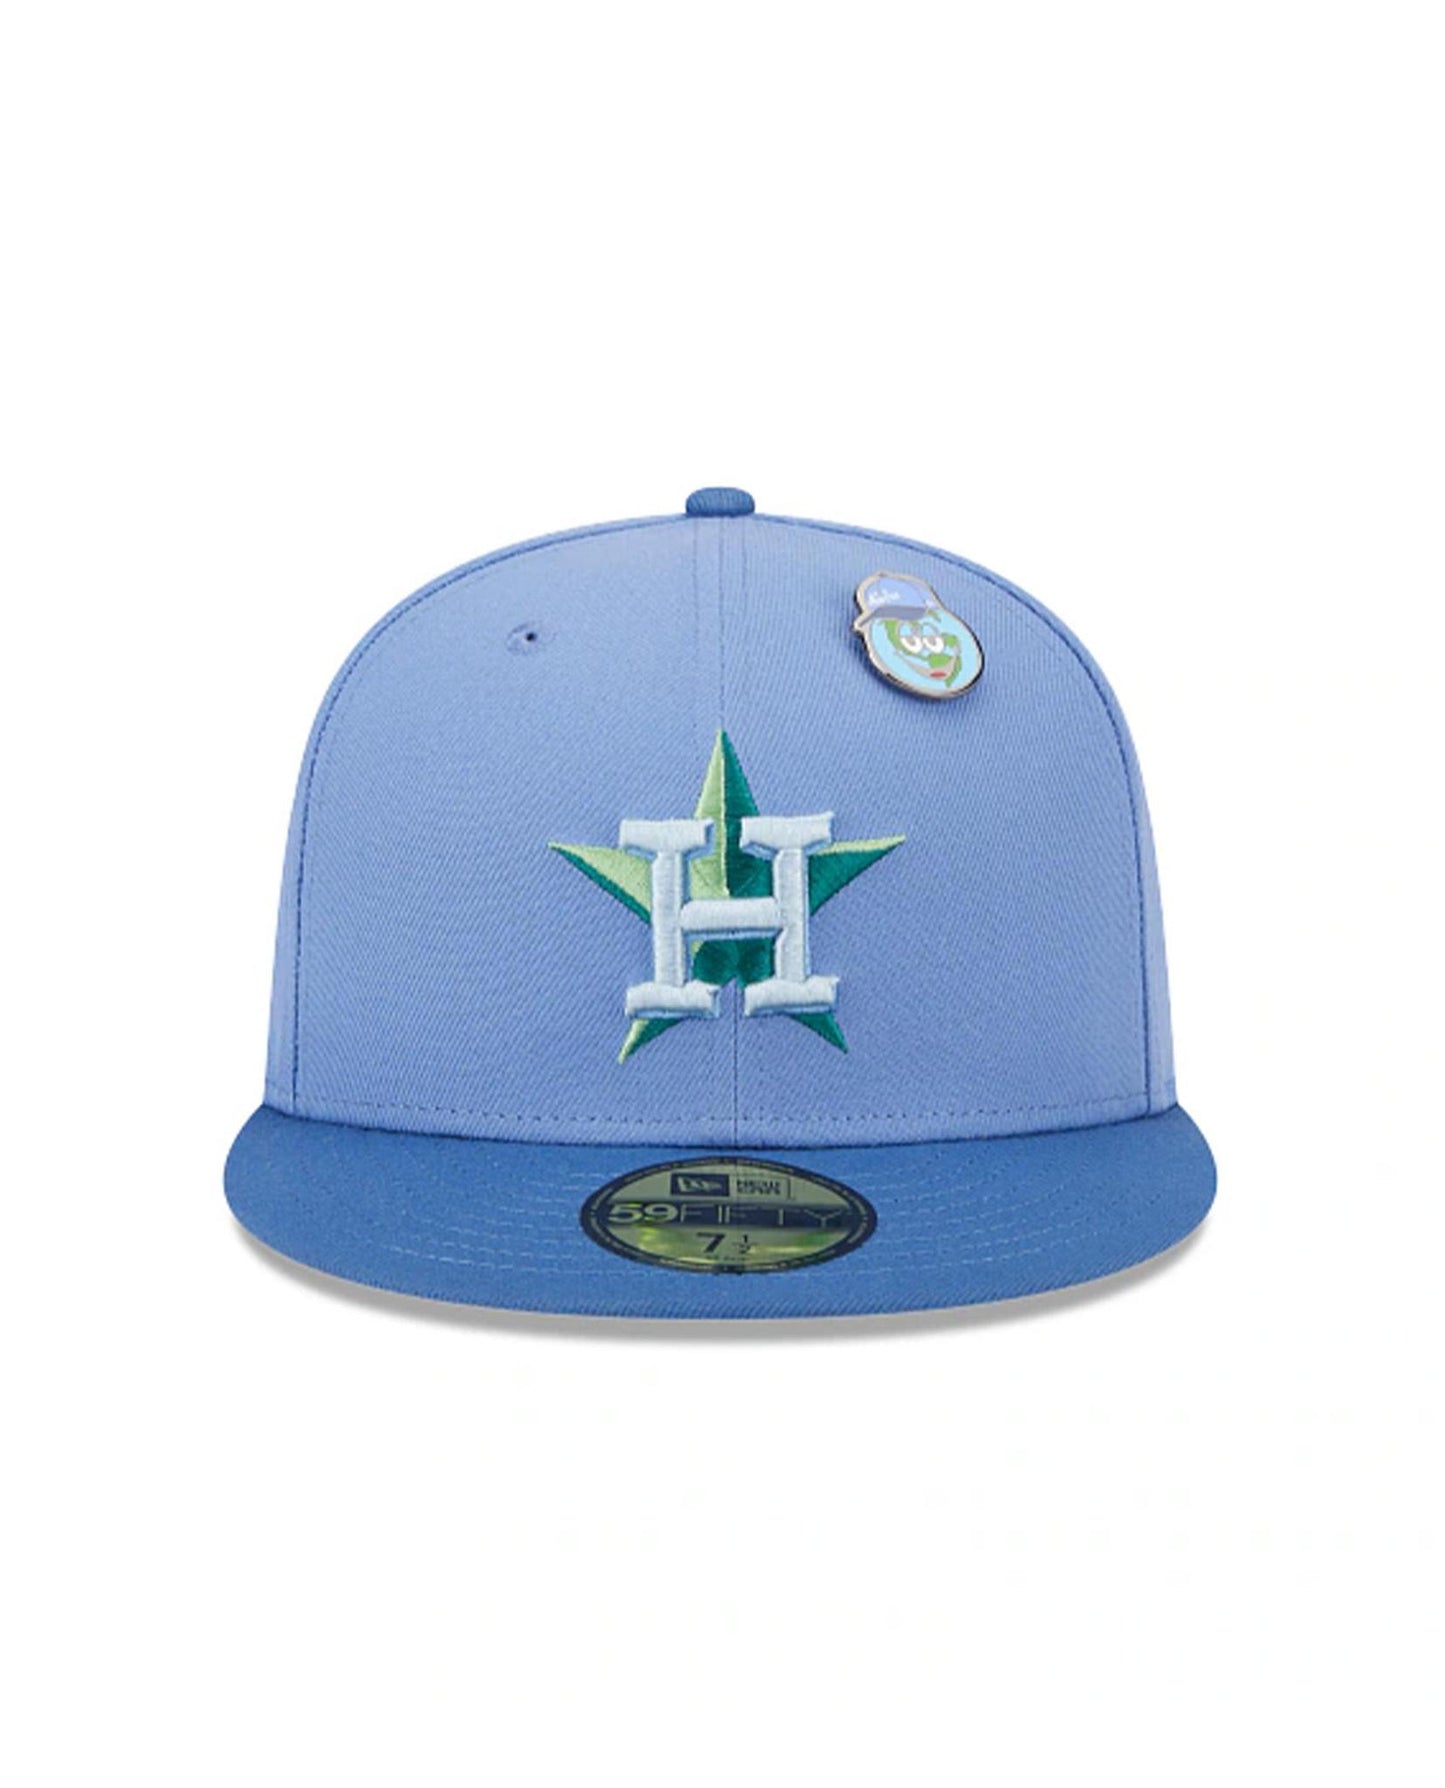 Houston Astros New Era 5950 League Basic Fitted Hat - Black/White